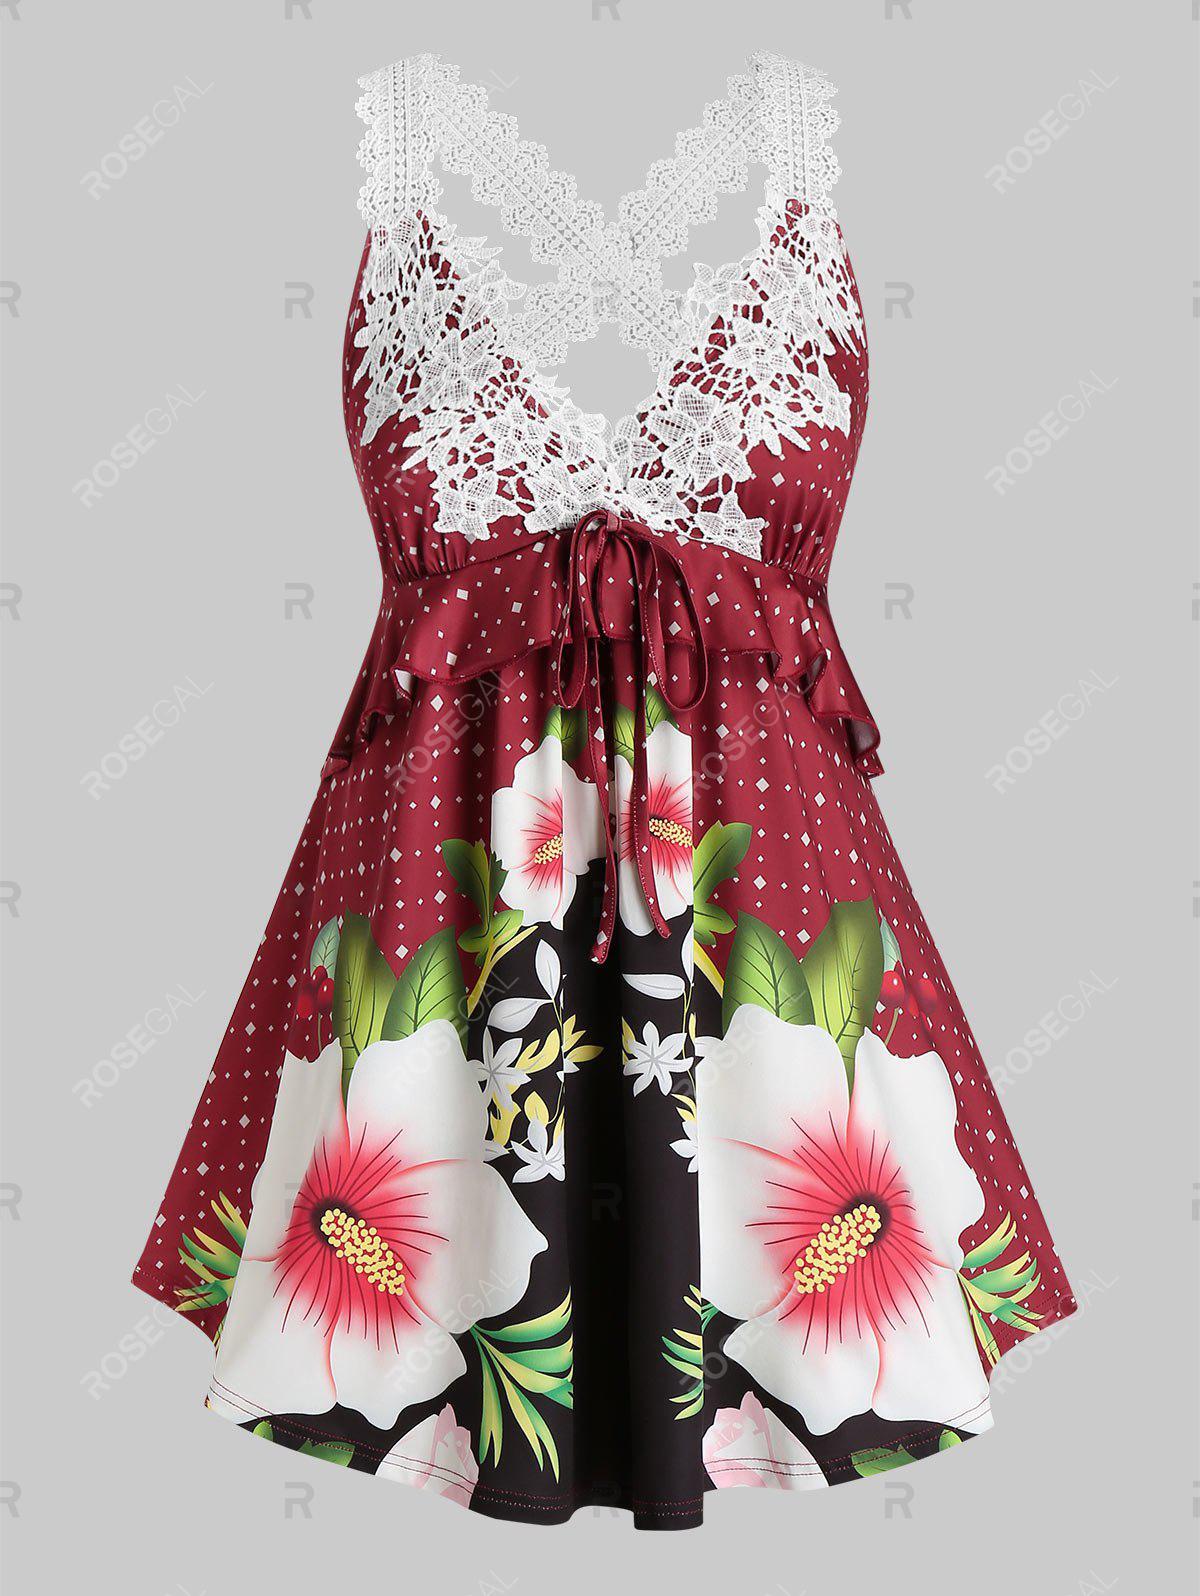 Lace Crochet Floral Crisscross Tank Top and Leggings Cottagecore Plus Size Summer Outfit